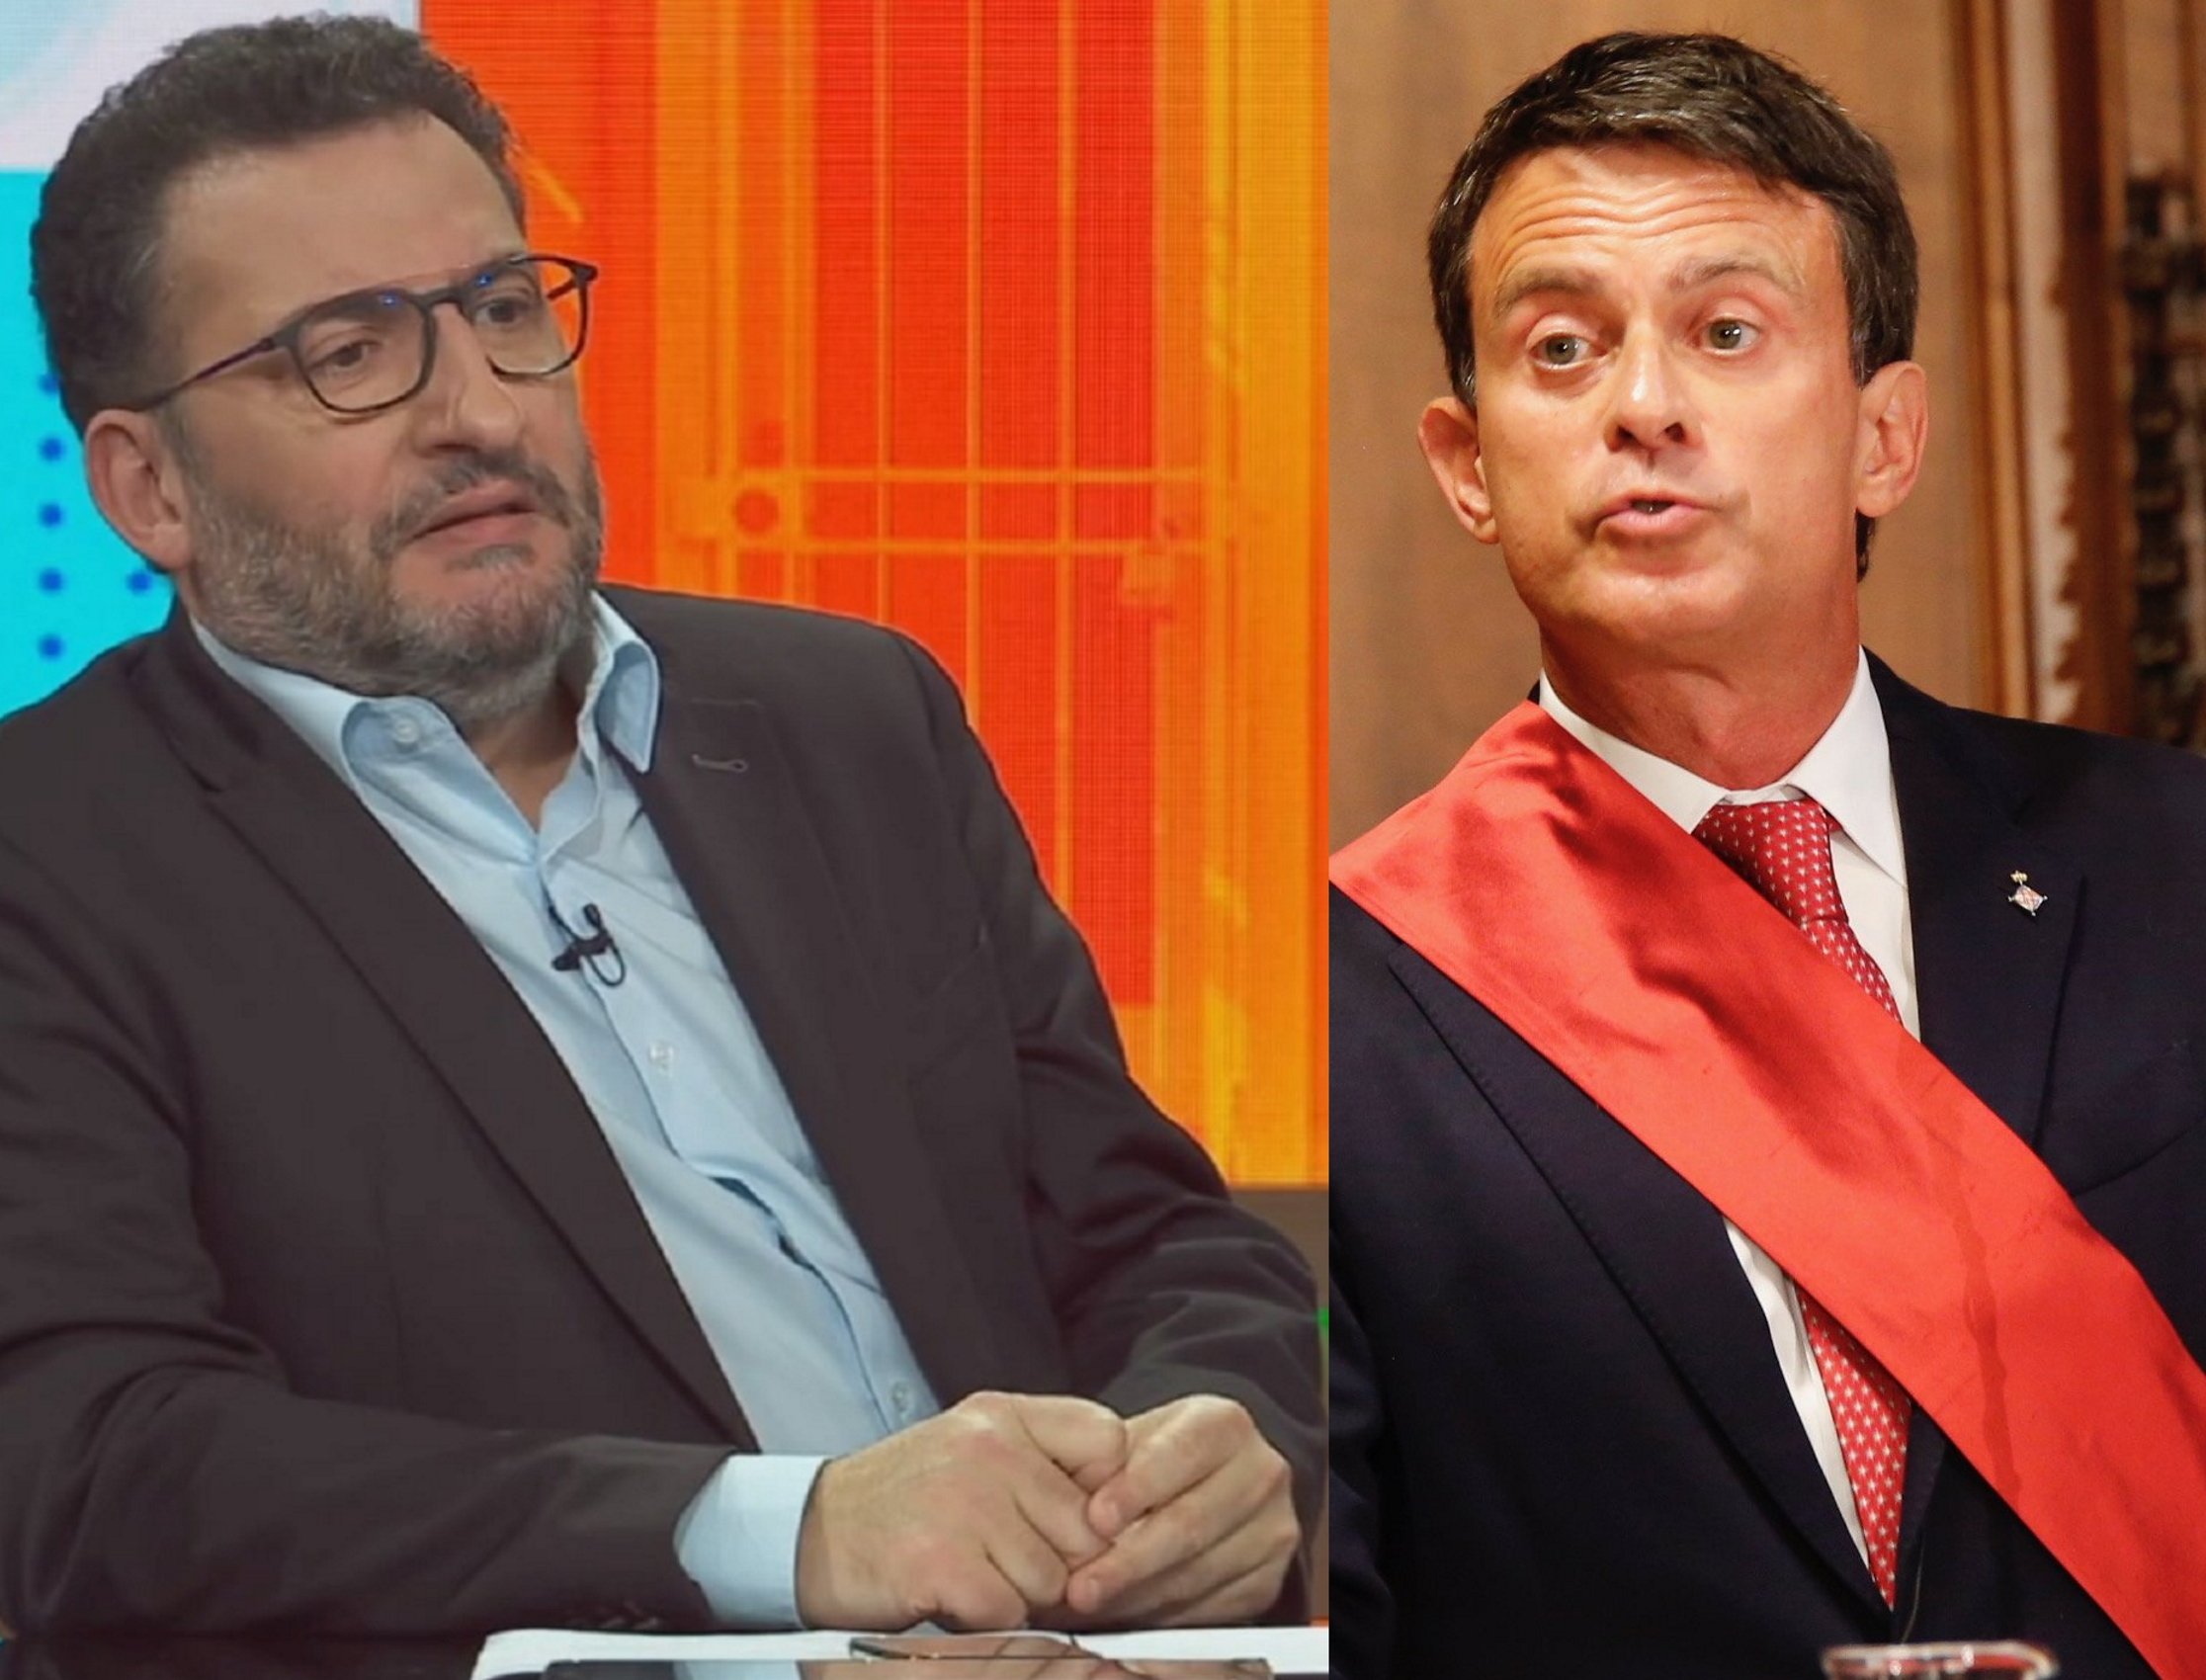 Manuel Valls escupe a TV3 y Polònia. Toni Soler lo hunde con un dato fundamental